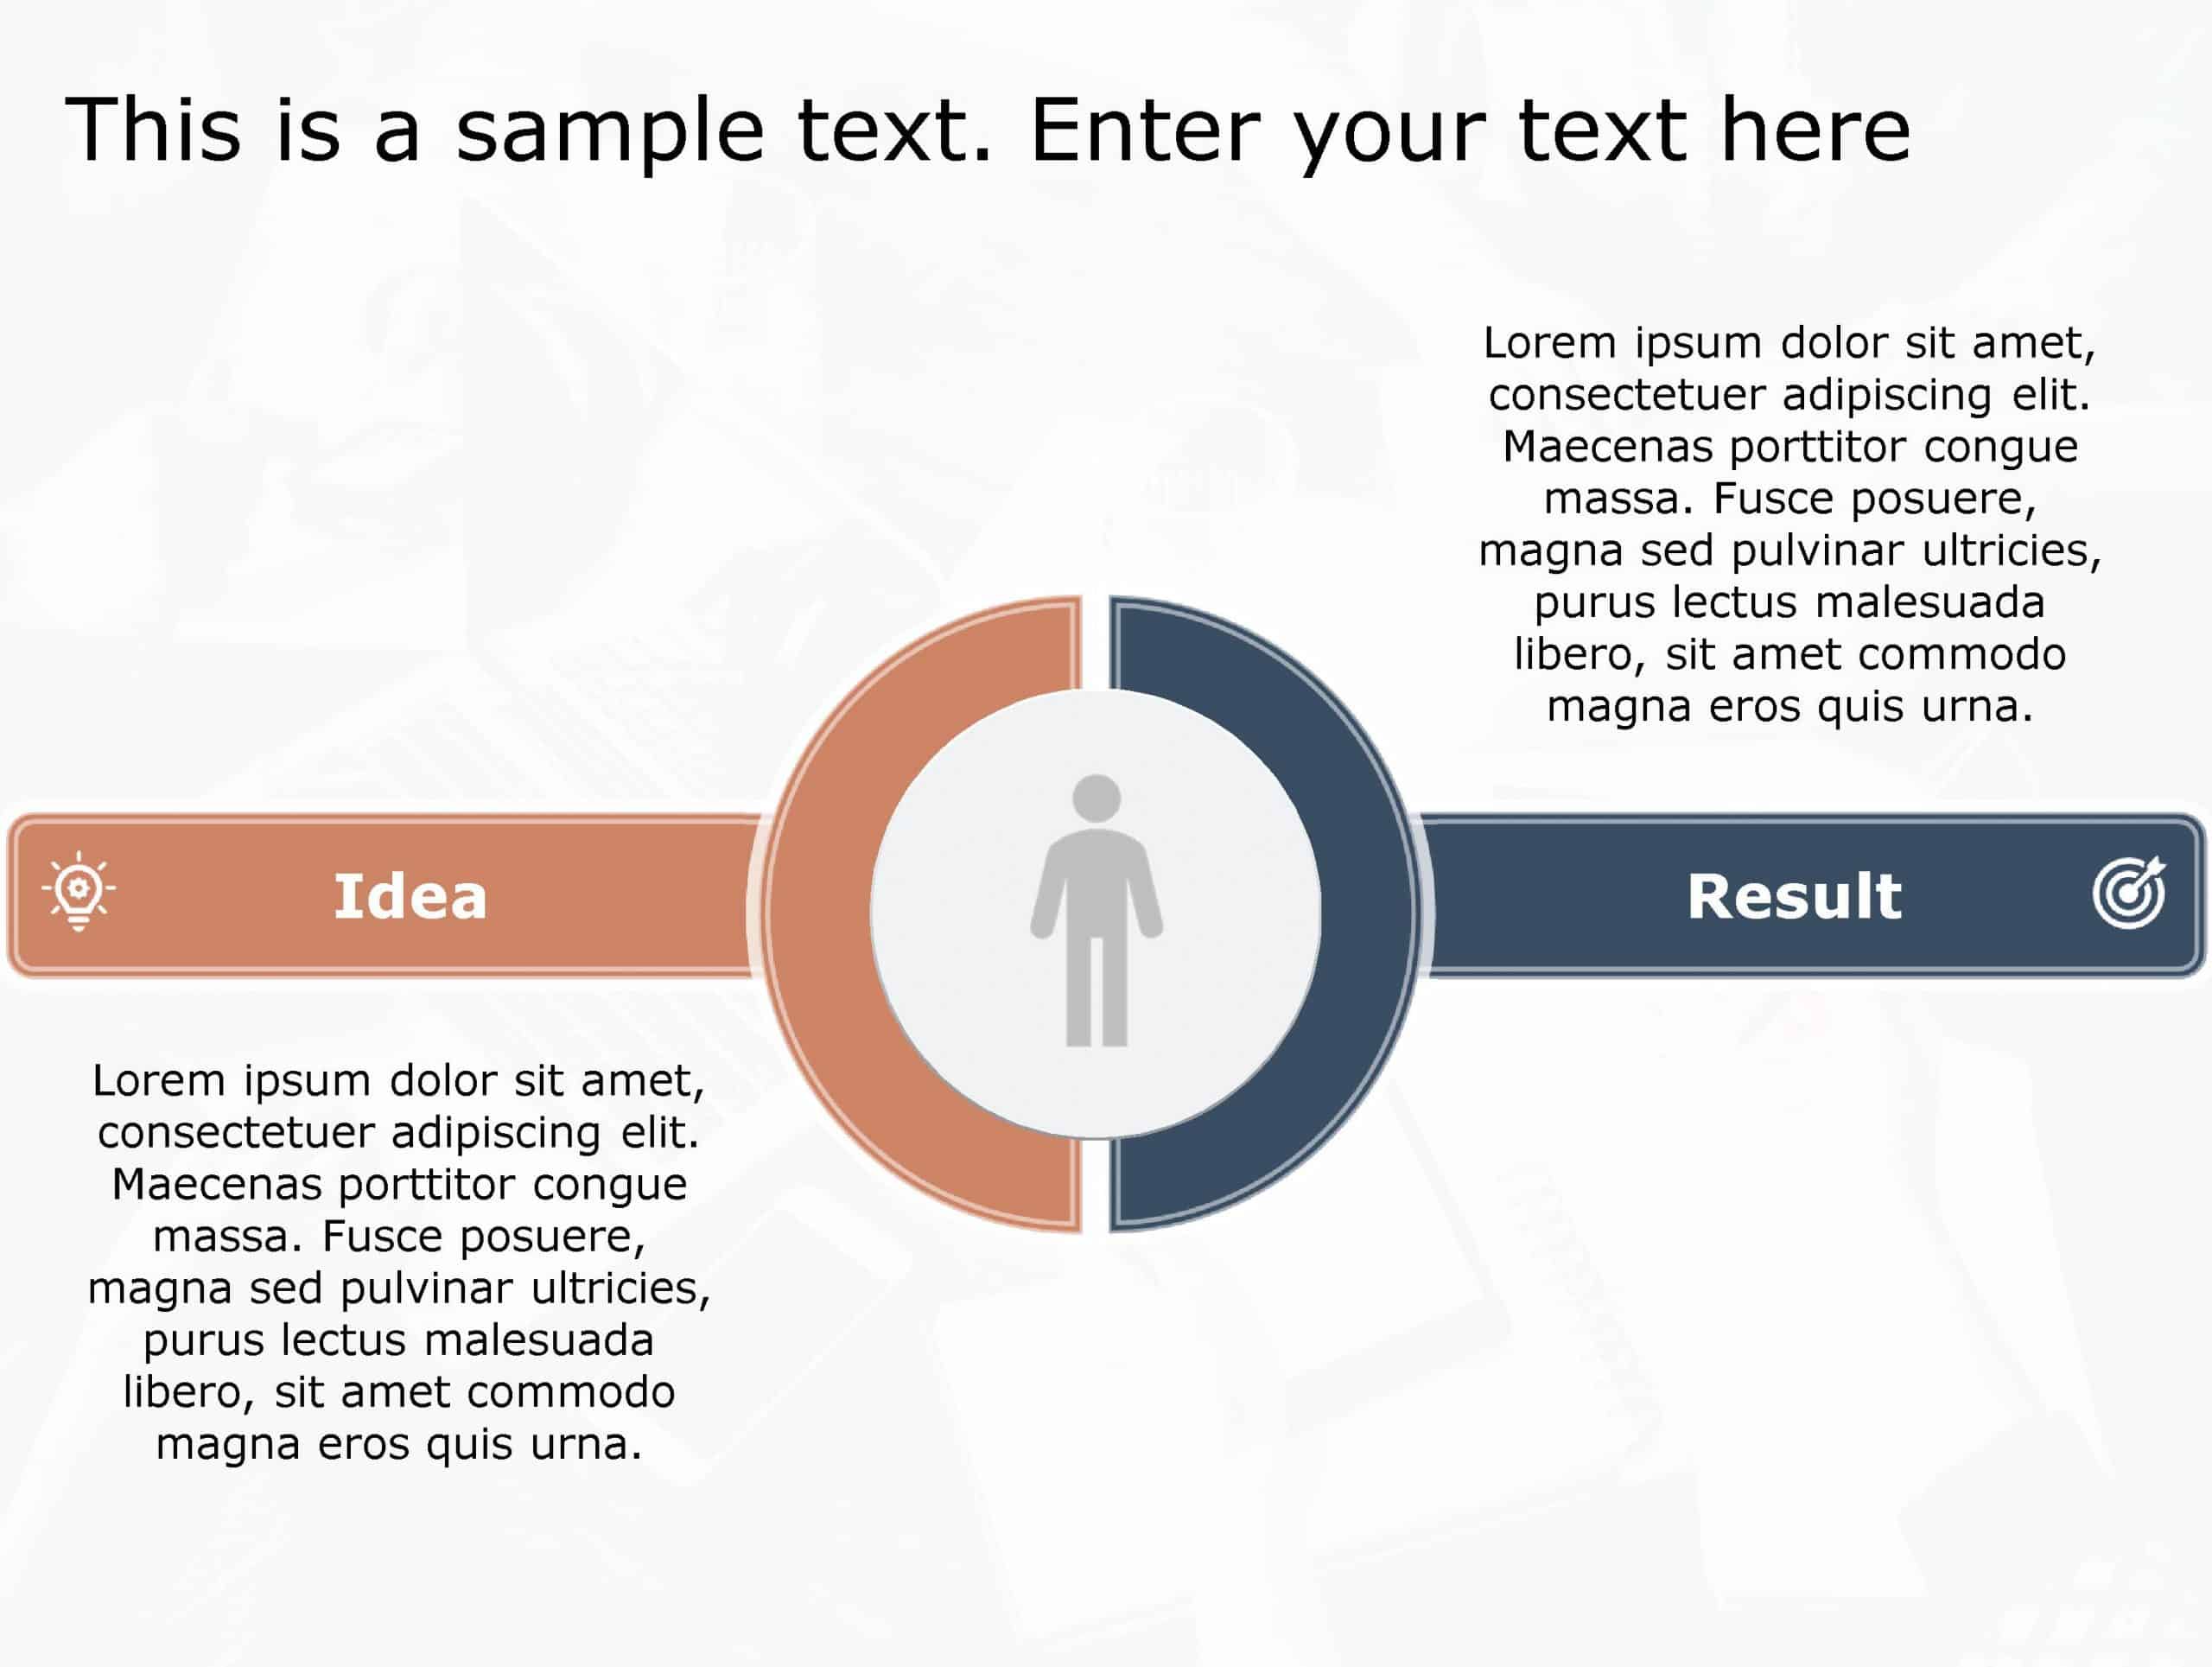 Idea Result 76 PowerPoint Template & Google Slides Theme